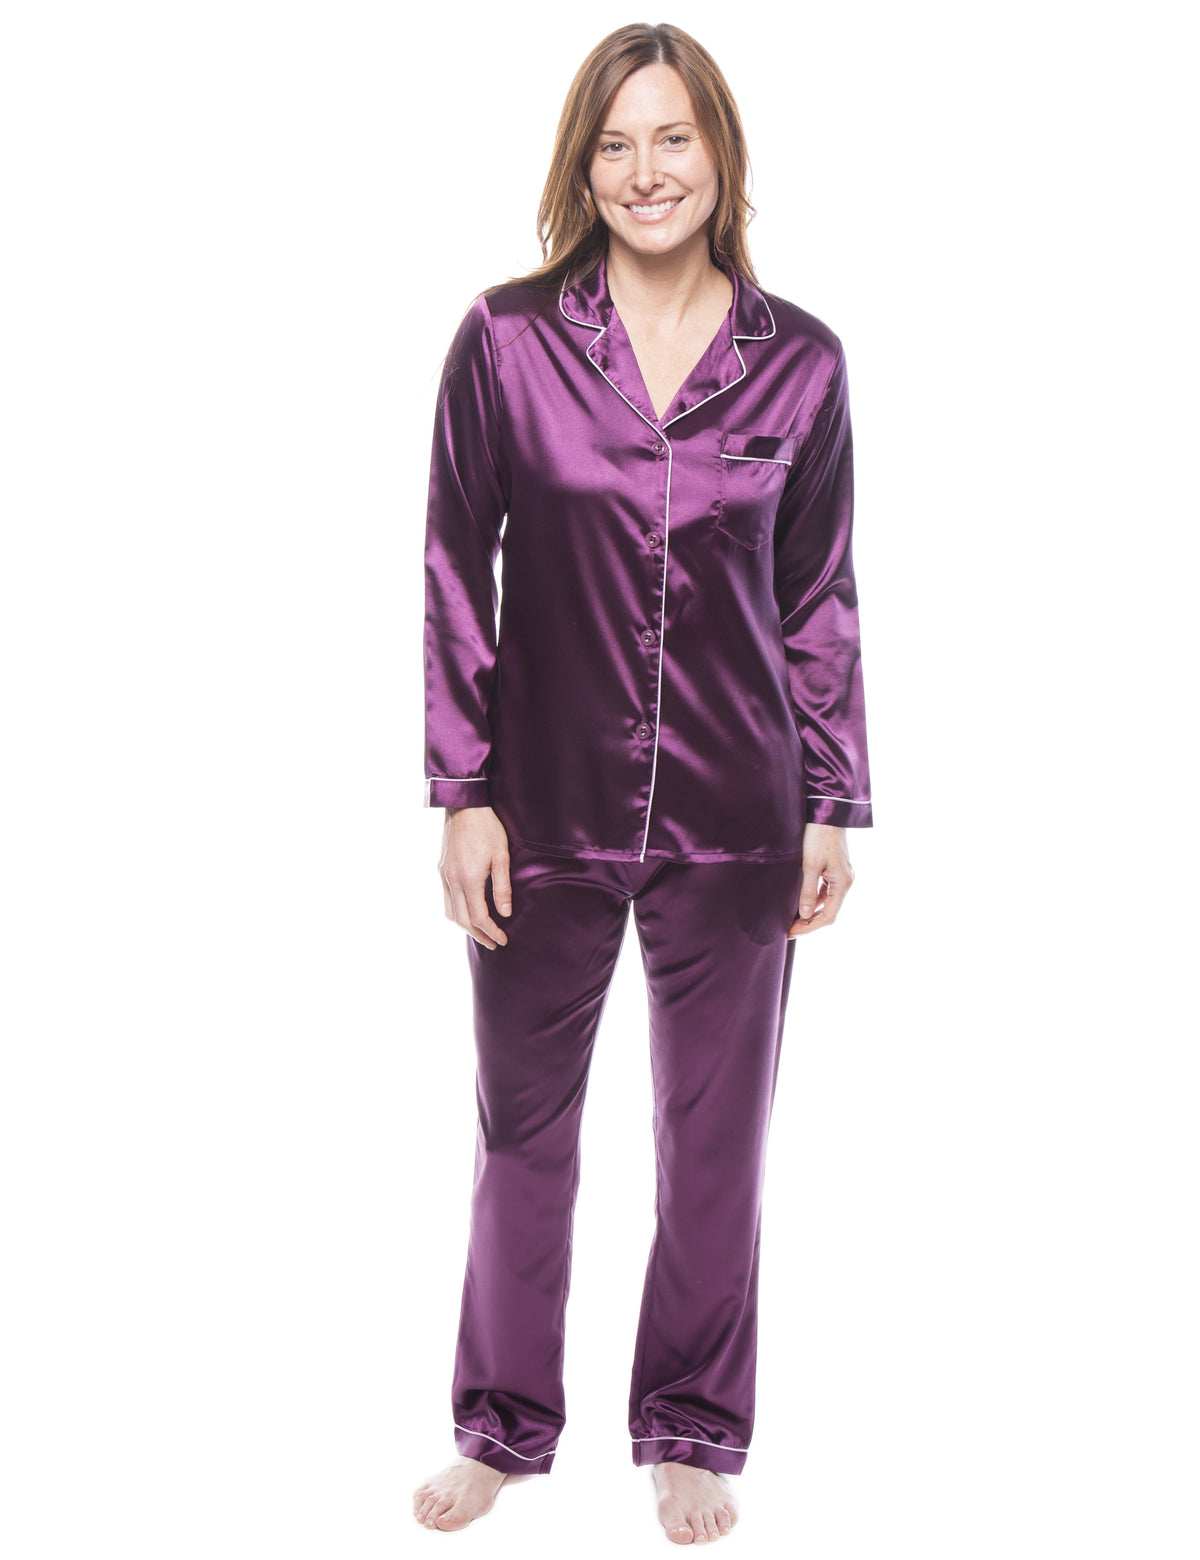 Women's Satin Pajama/Sleepwear Set - Dark Purple